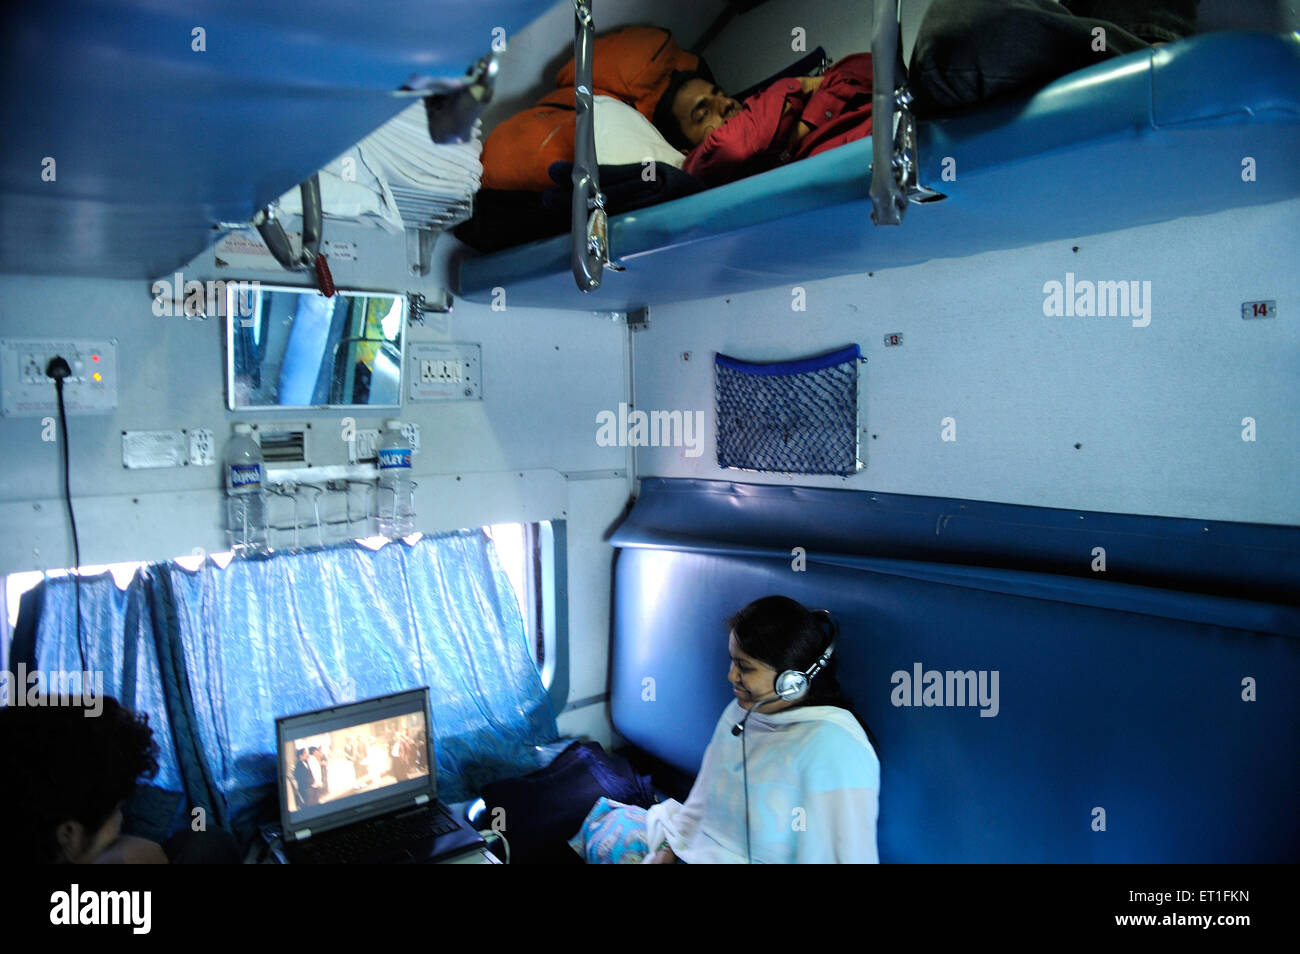 Passengers watching movie on laptop inside train ; India MR#400 Stock Photo